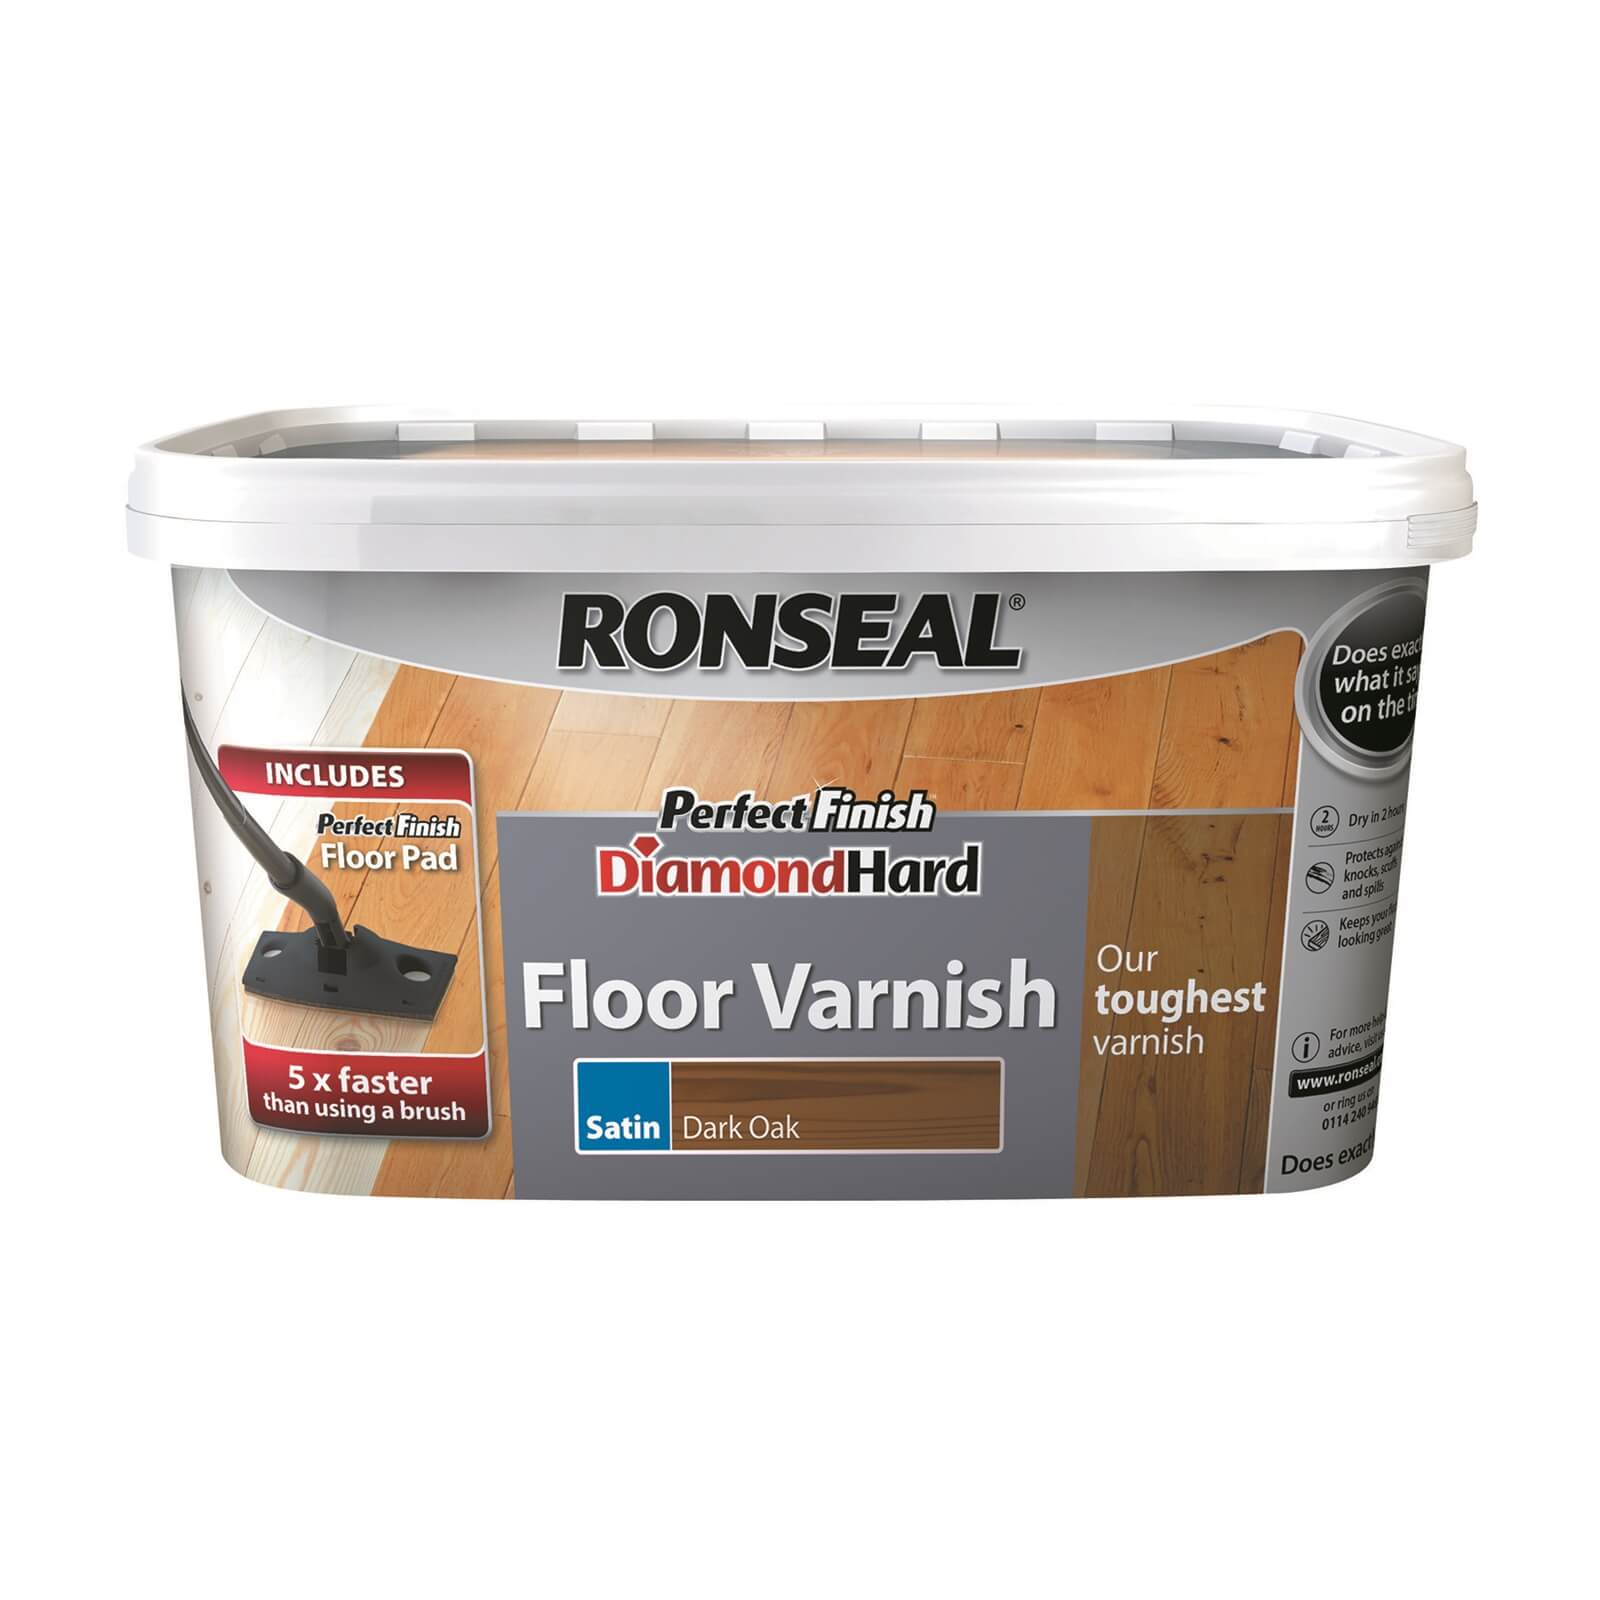 Ronseal Perfect Finish Diamond Hard Floor Varnish - Dark Oak Satin 2.5L